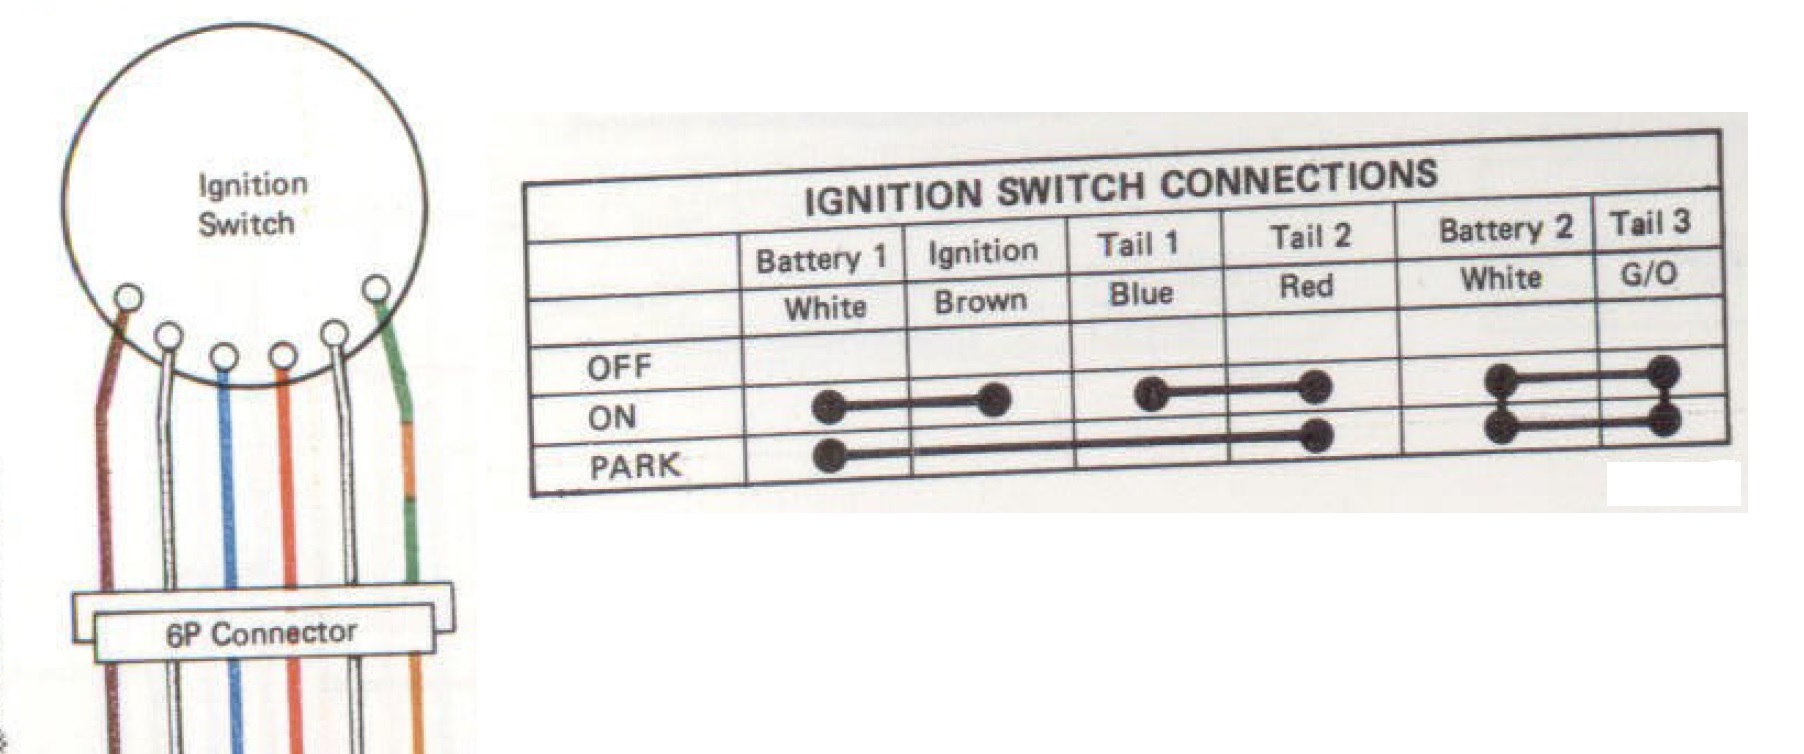 Ignition Switch Connector - Kzrider Forum